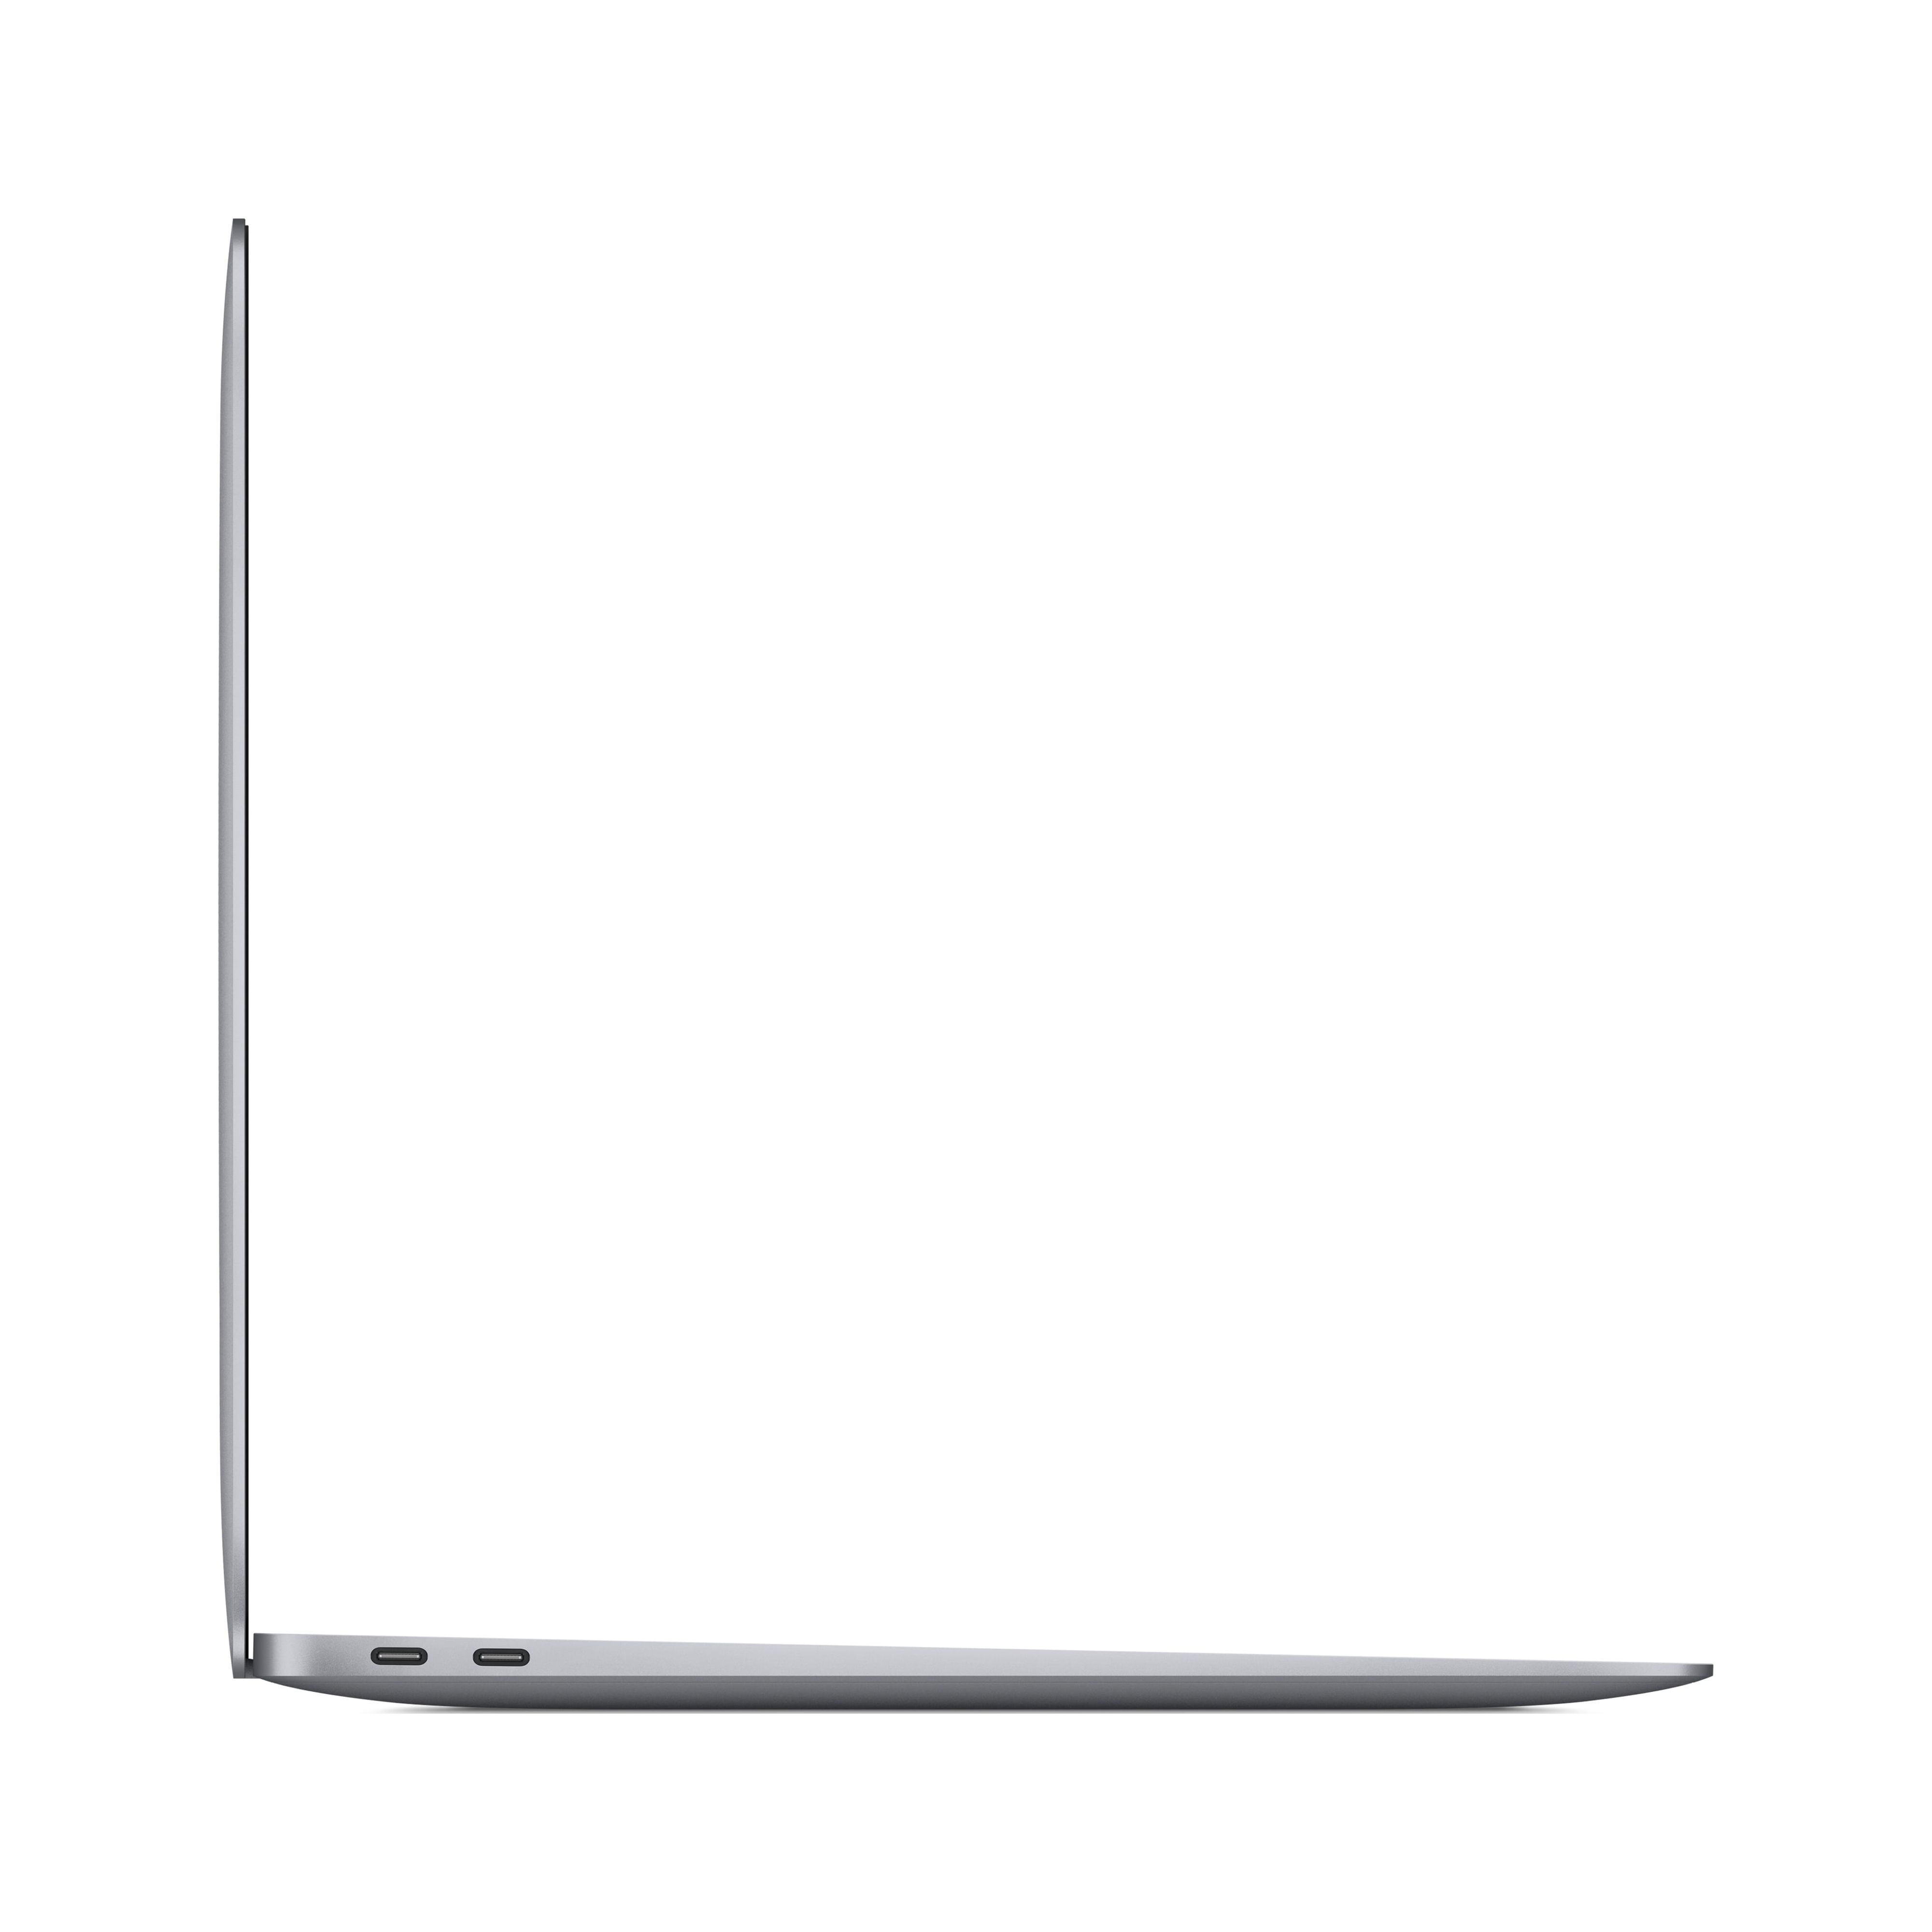 Apple MacBook Air 13.3 inch Laptop - Space Gray, M1 Chip, 8GB RAM, 256GB storage - image 5 of 10